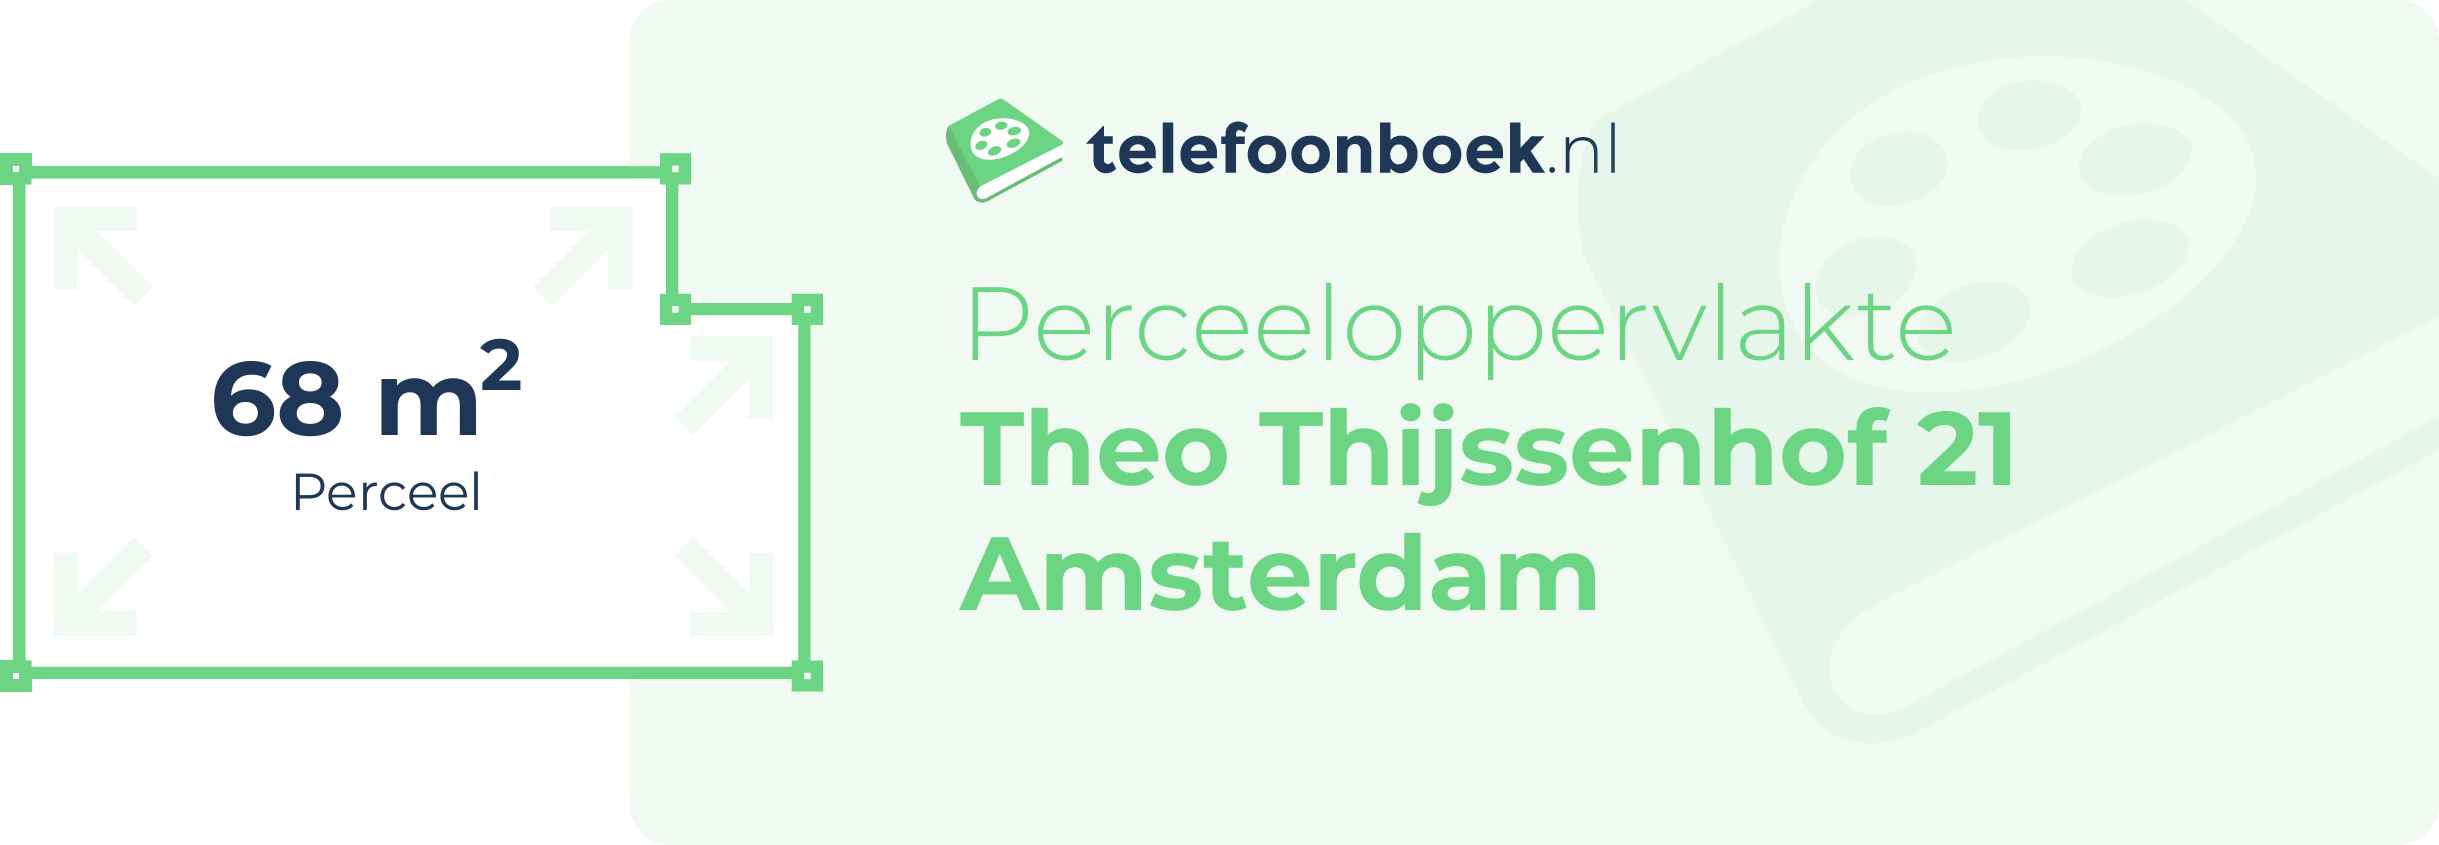 Perceeloppervlakte Theo Thijssenhof 21 Amsterdam